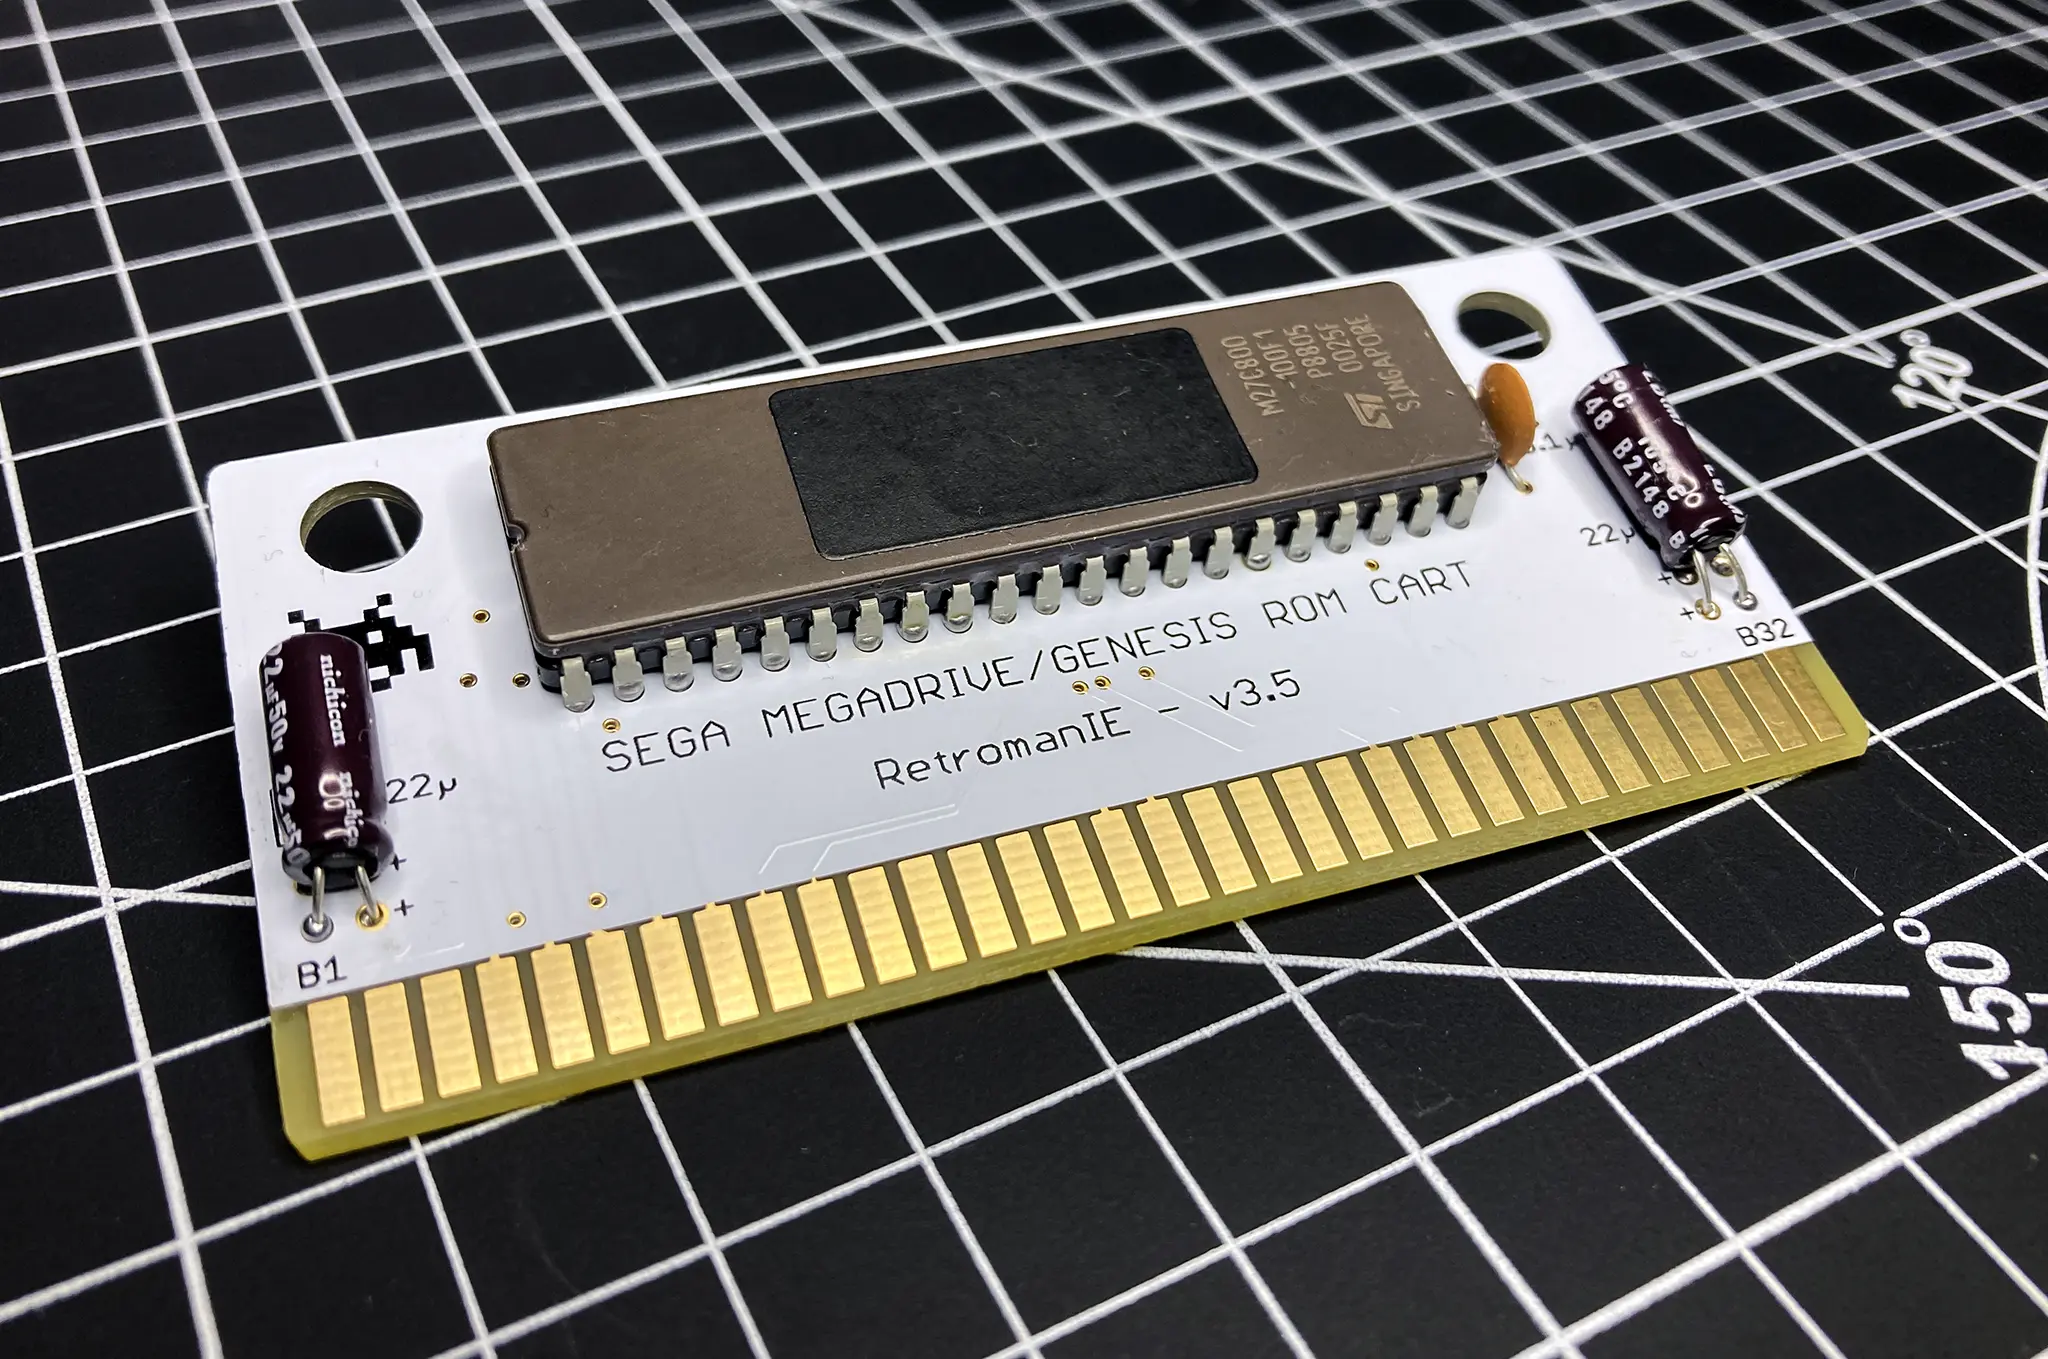 SEGA Mega Drive / Genesis Cartridge PCB v3.5 – Gadunky